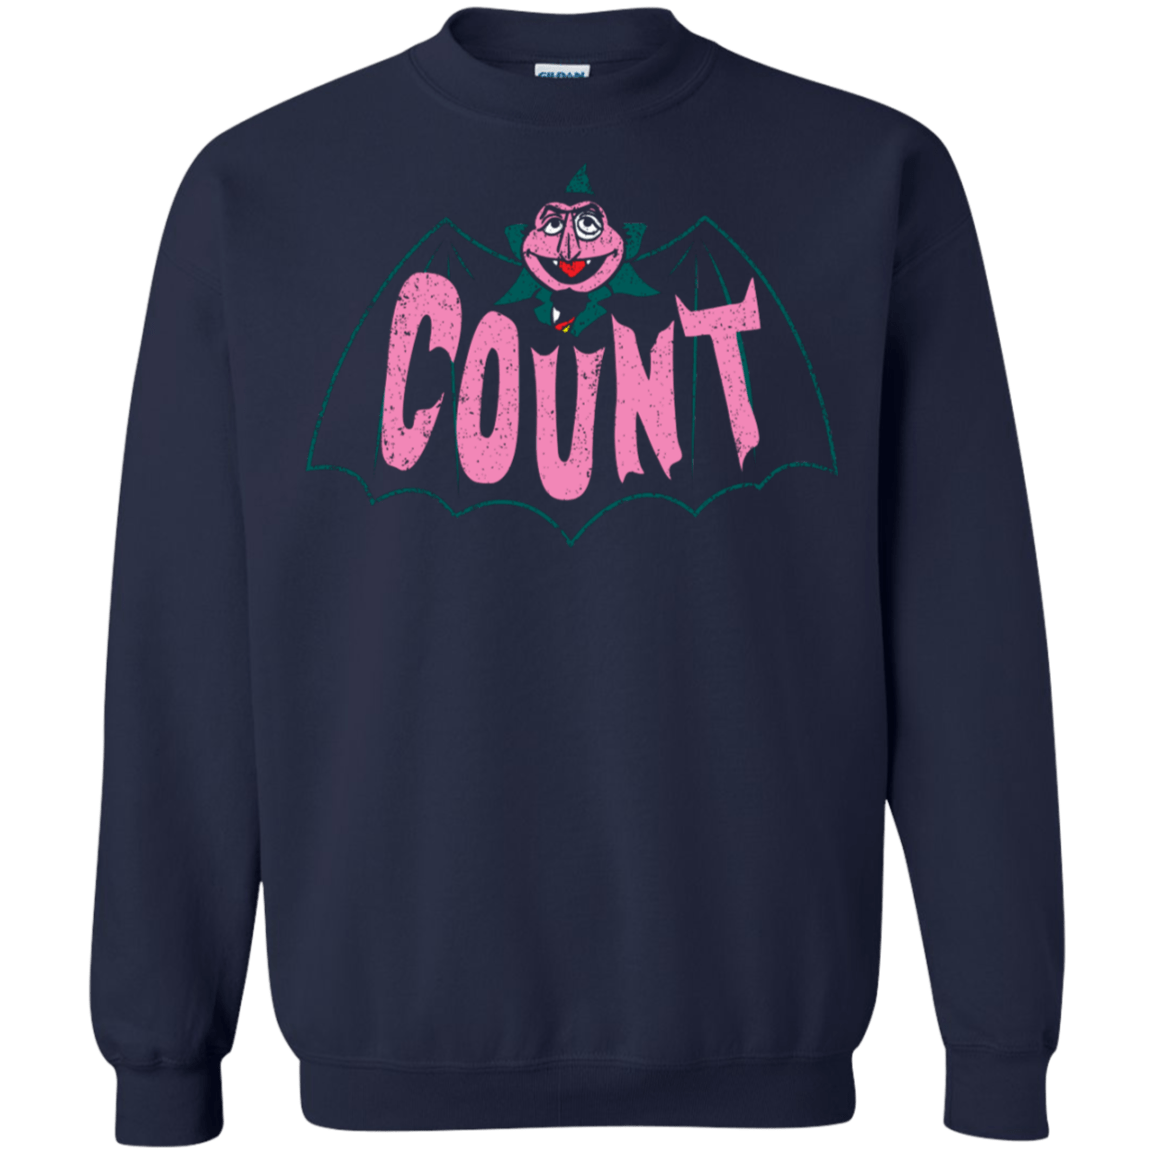 Sweatshirts Navy / S Count Crewneck Sweatshirt